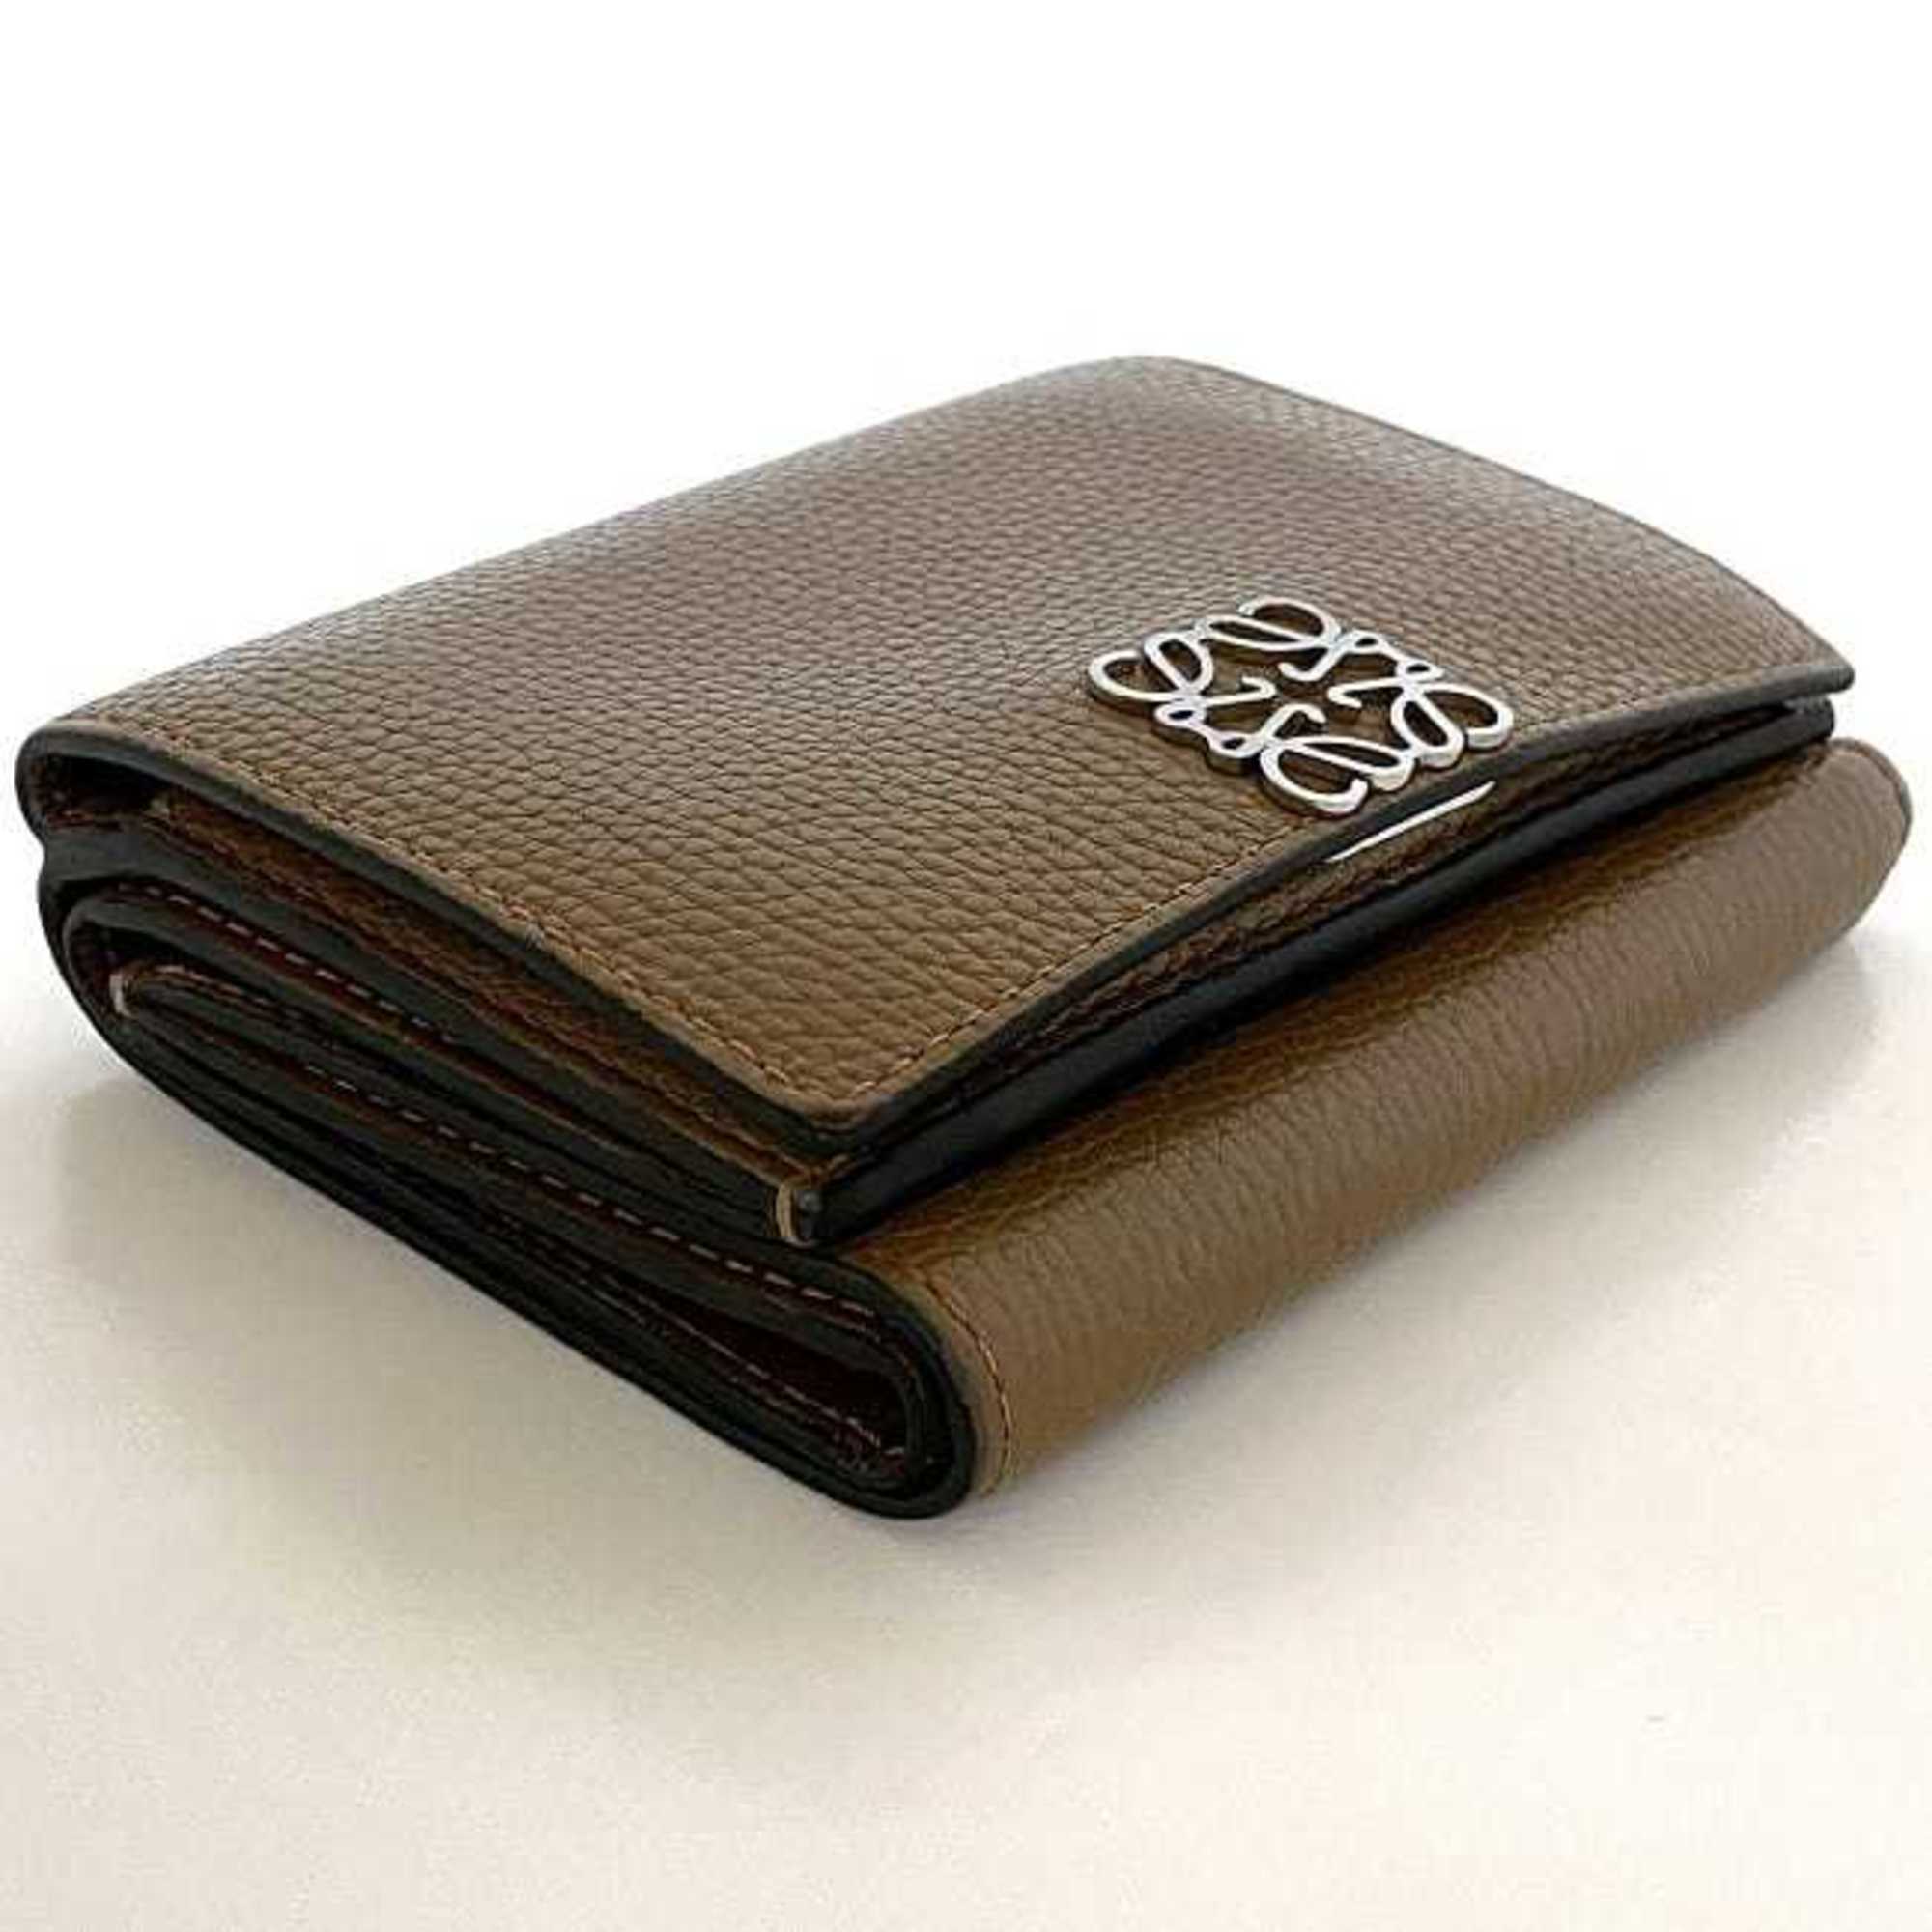 LOEWE Tri-fold Wallet Brown Anagram ec-20142 Leather Compact Women's